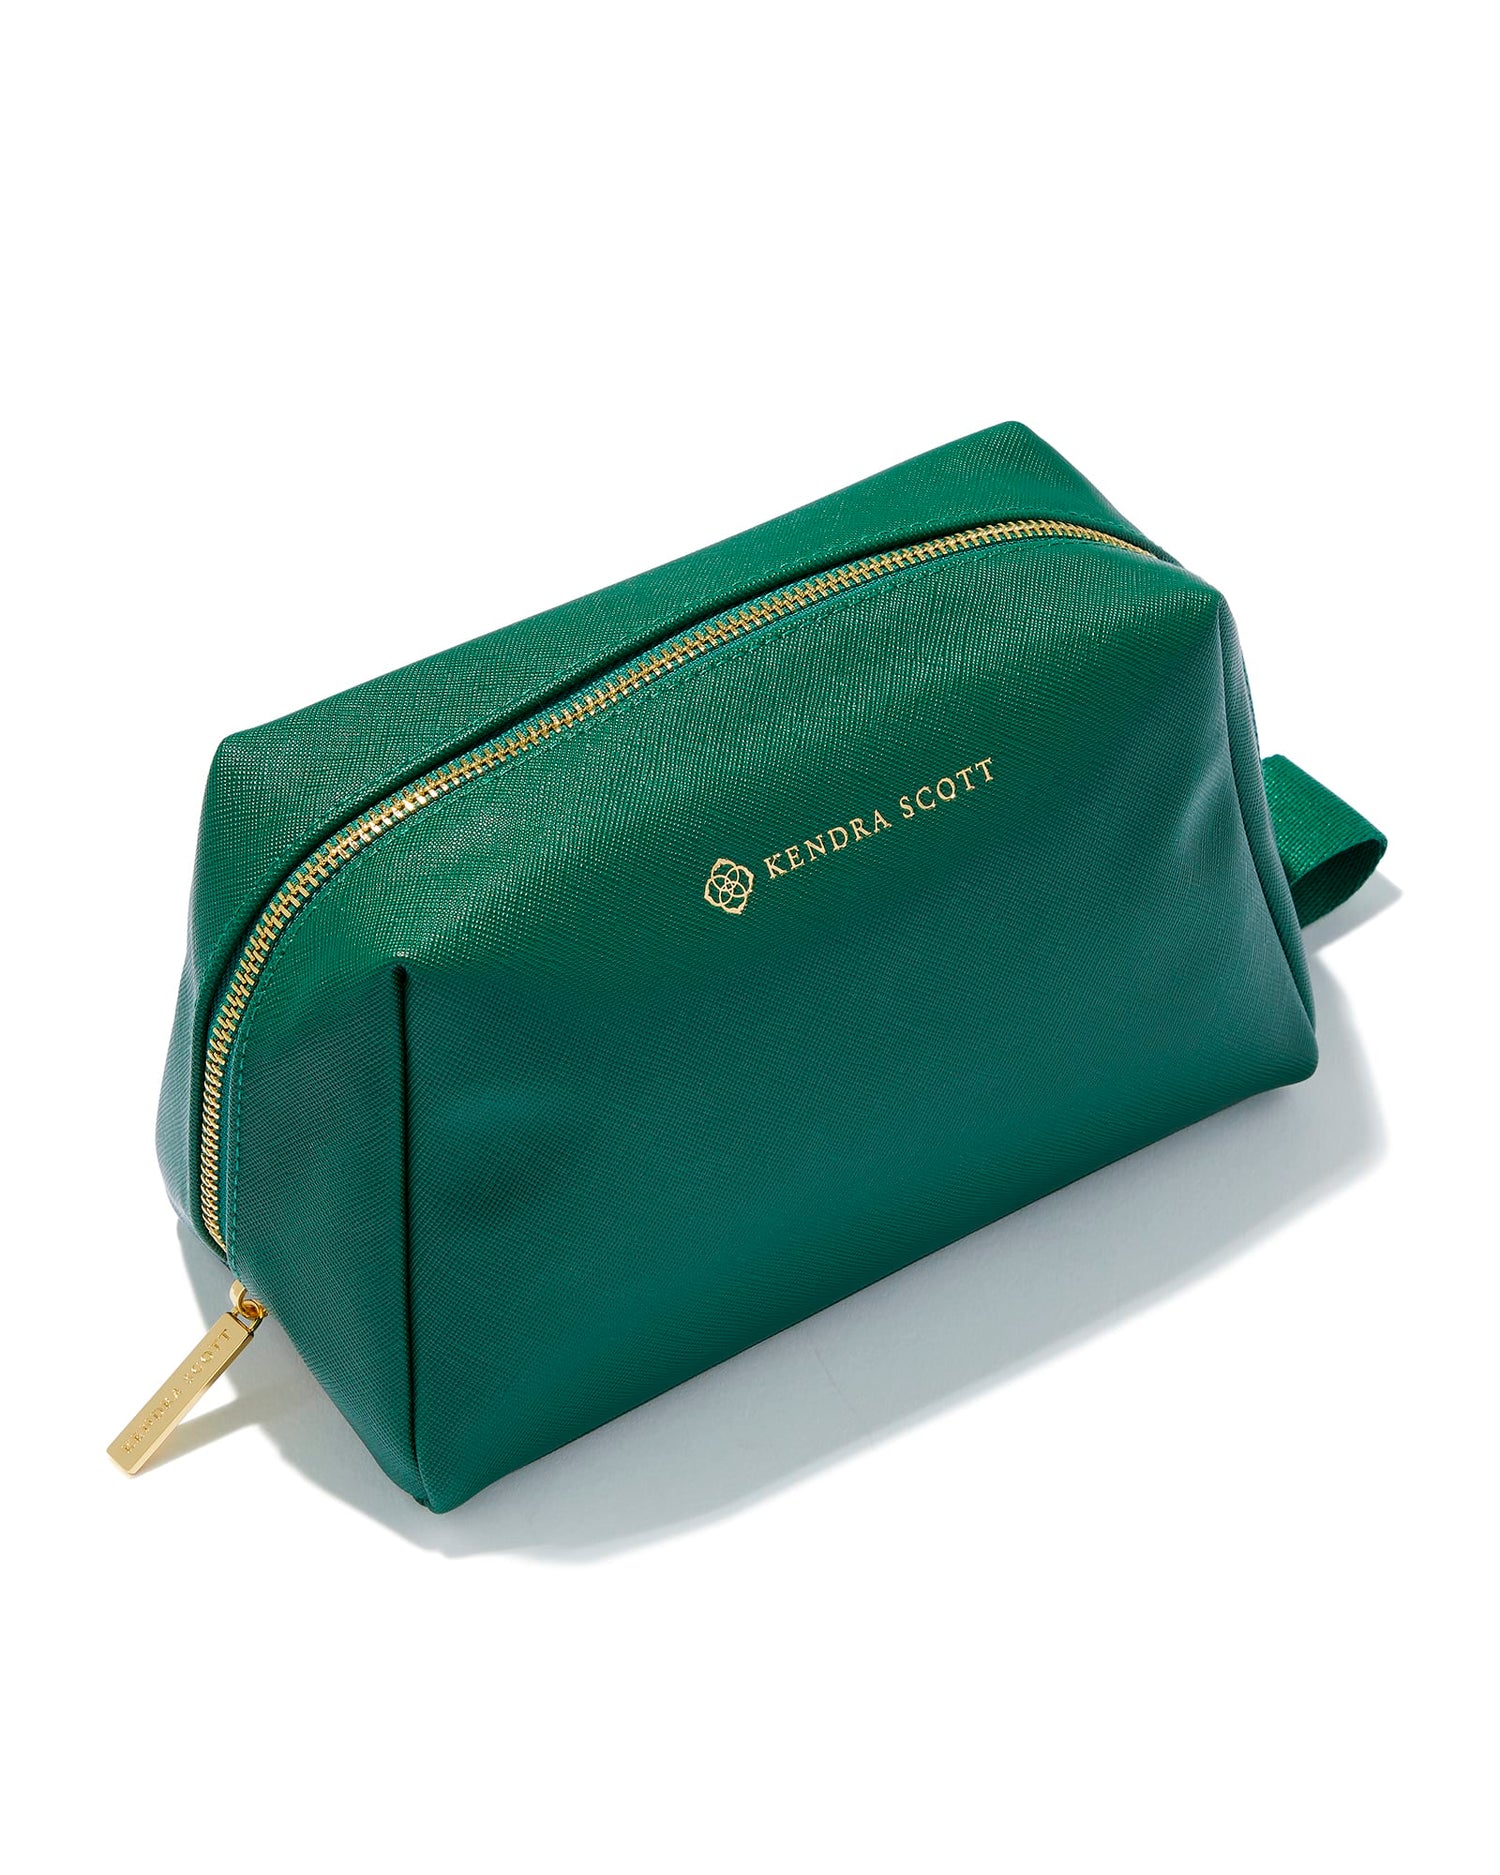 green cosmetic zip case gold zipper and kendra scott label